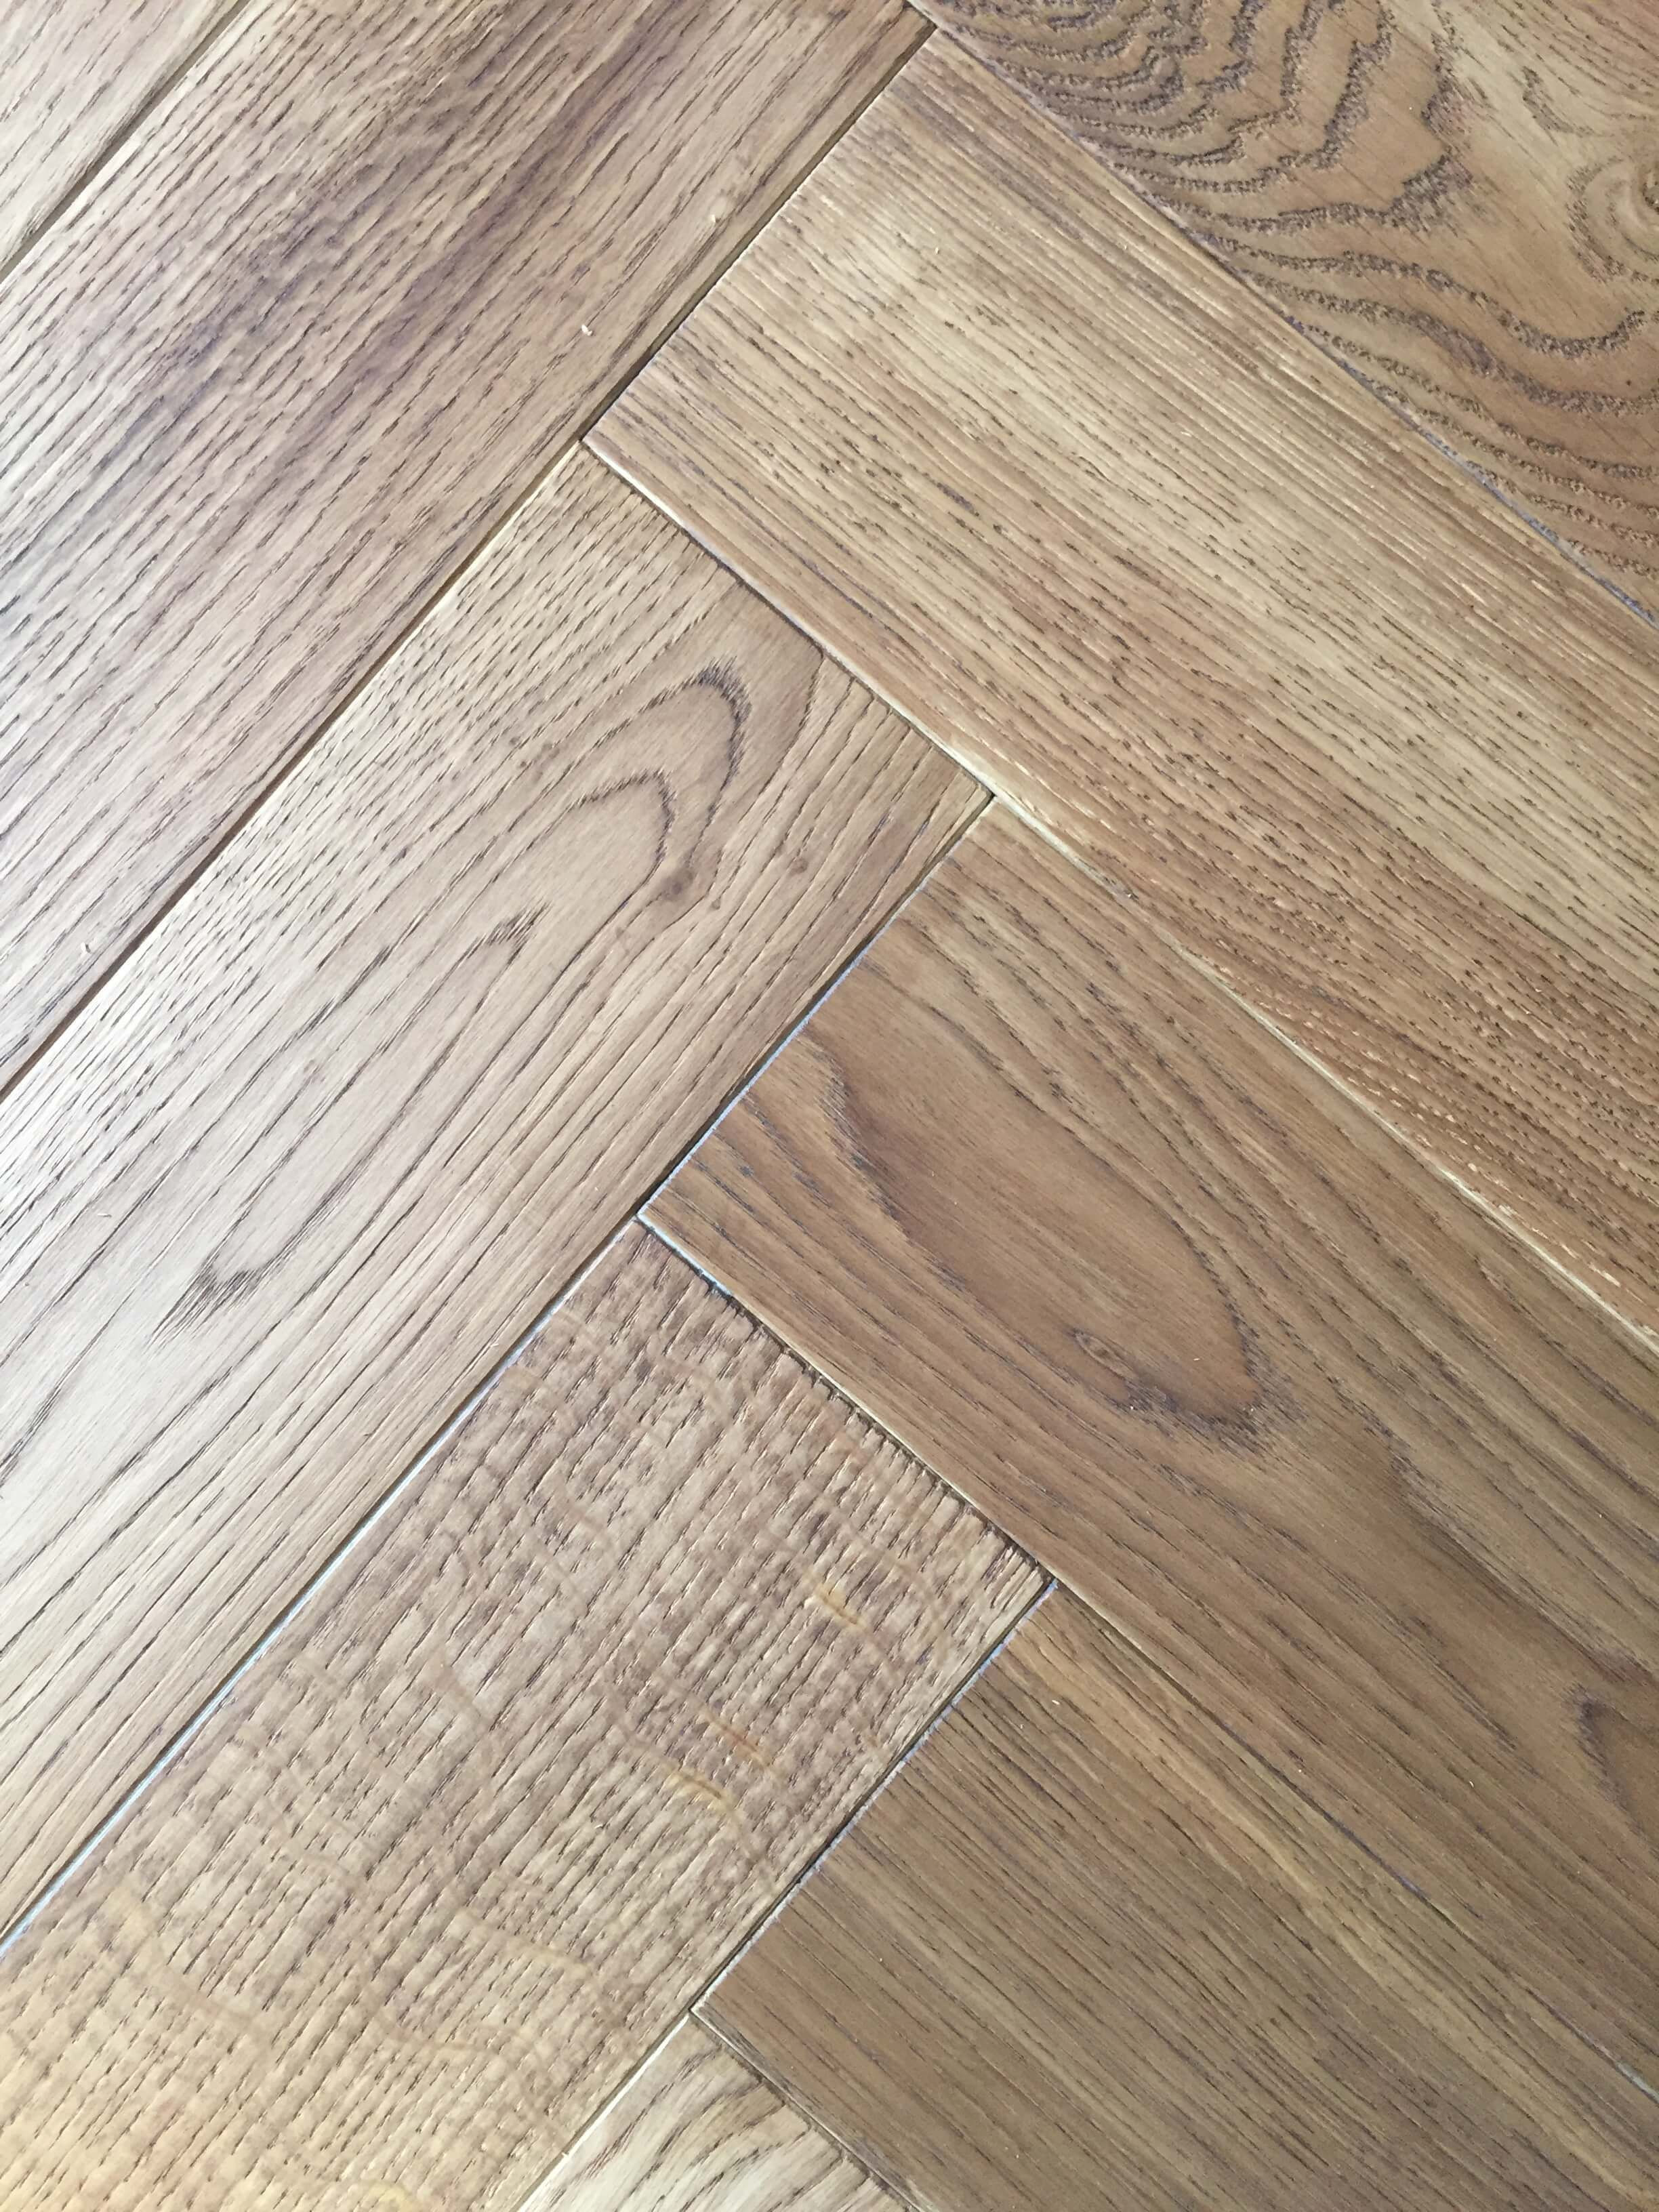 white oak hardwood flooring stains of white wood laminate floor plan ideas with regard to 40 light oak engineered hardwood flooring ideas